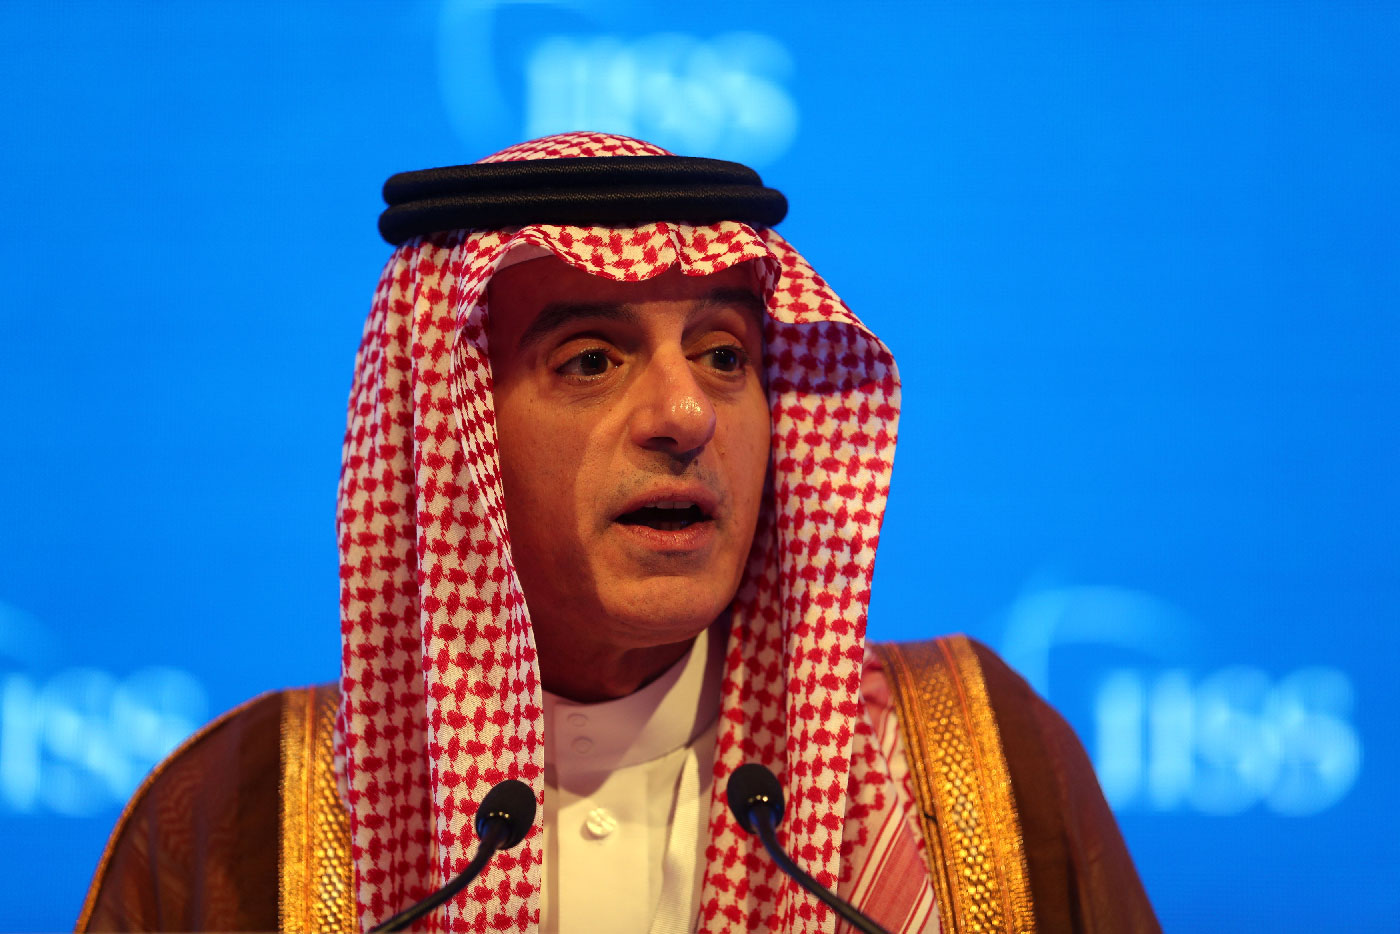 Saudi Minister of State Adel al-Jubeir